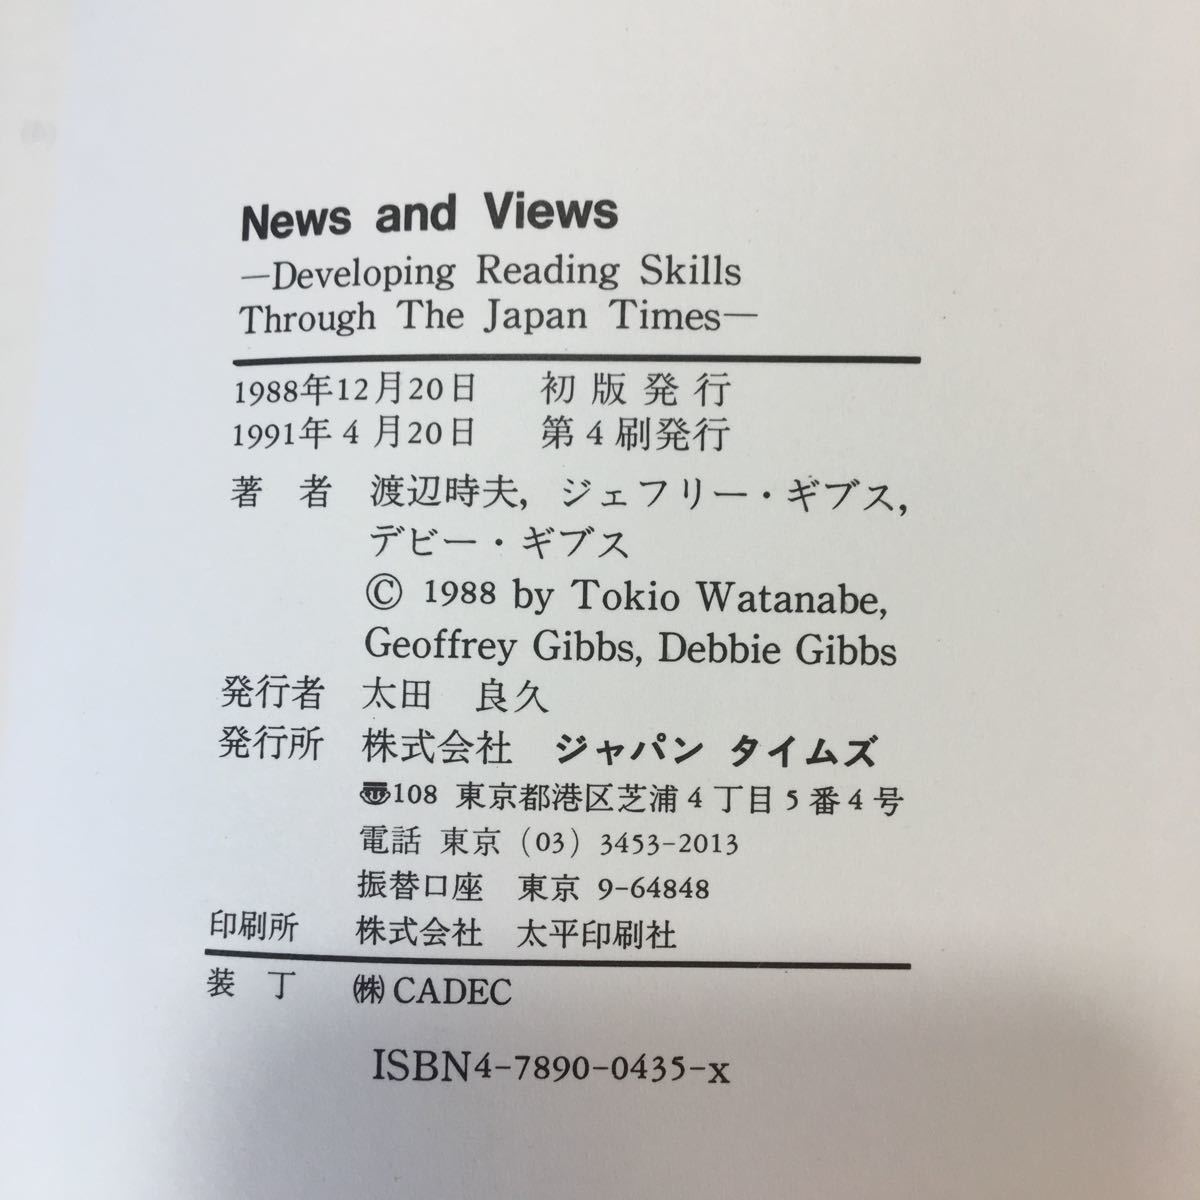 zaa-3541♪News and Views 単行本 1991/9/1 The Japan Times